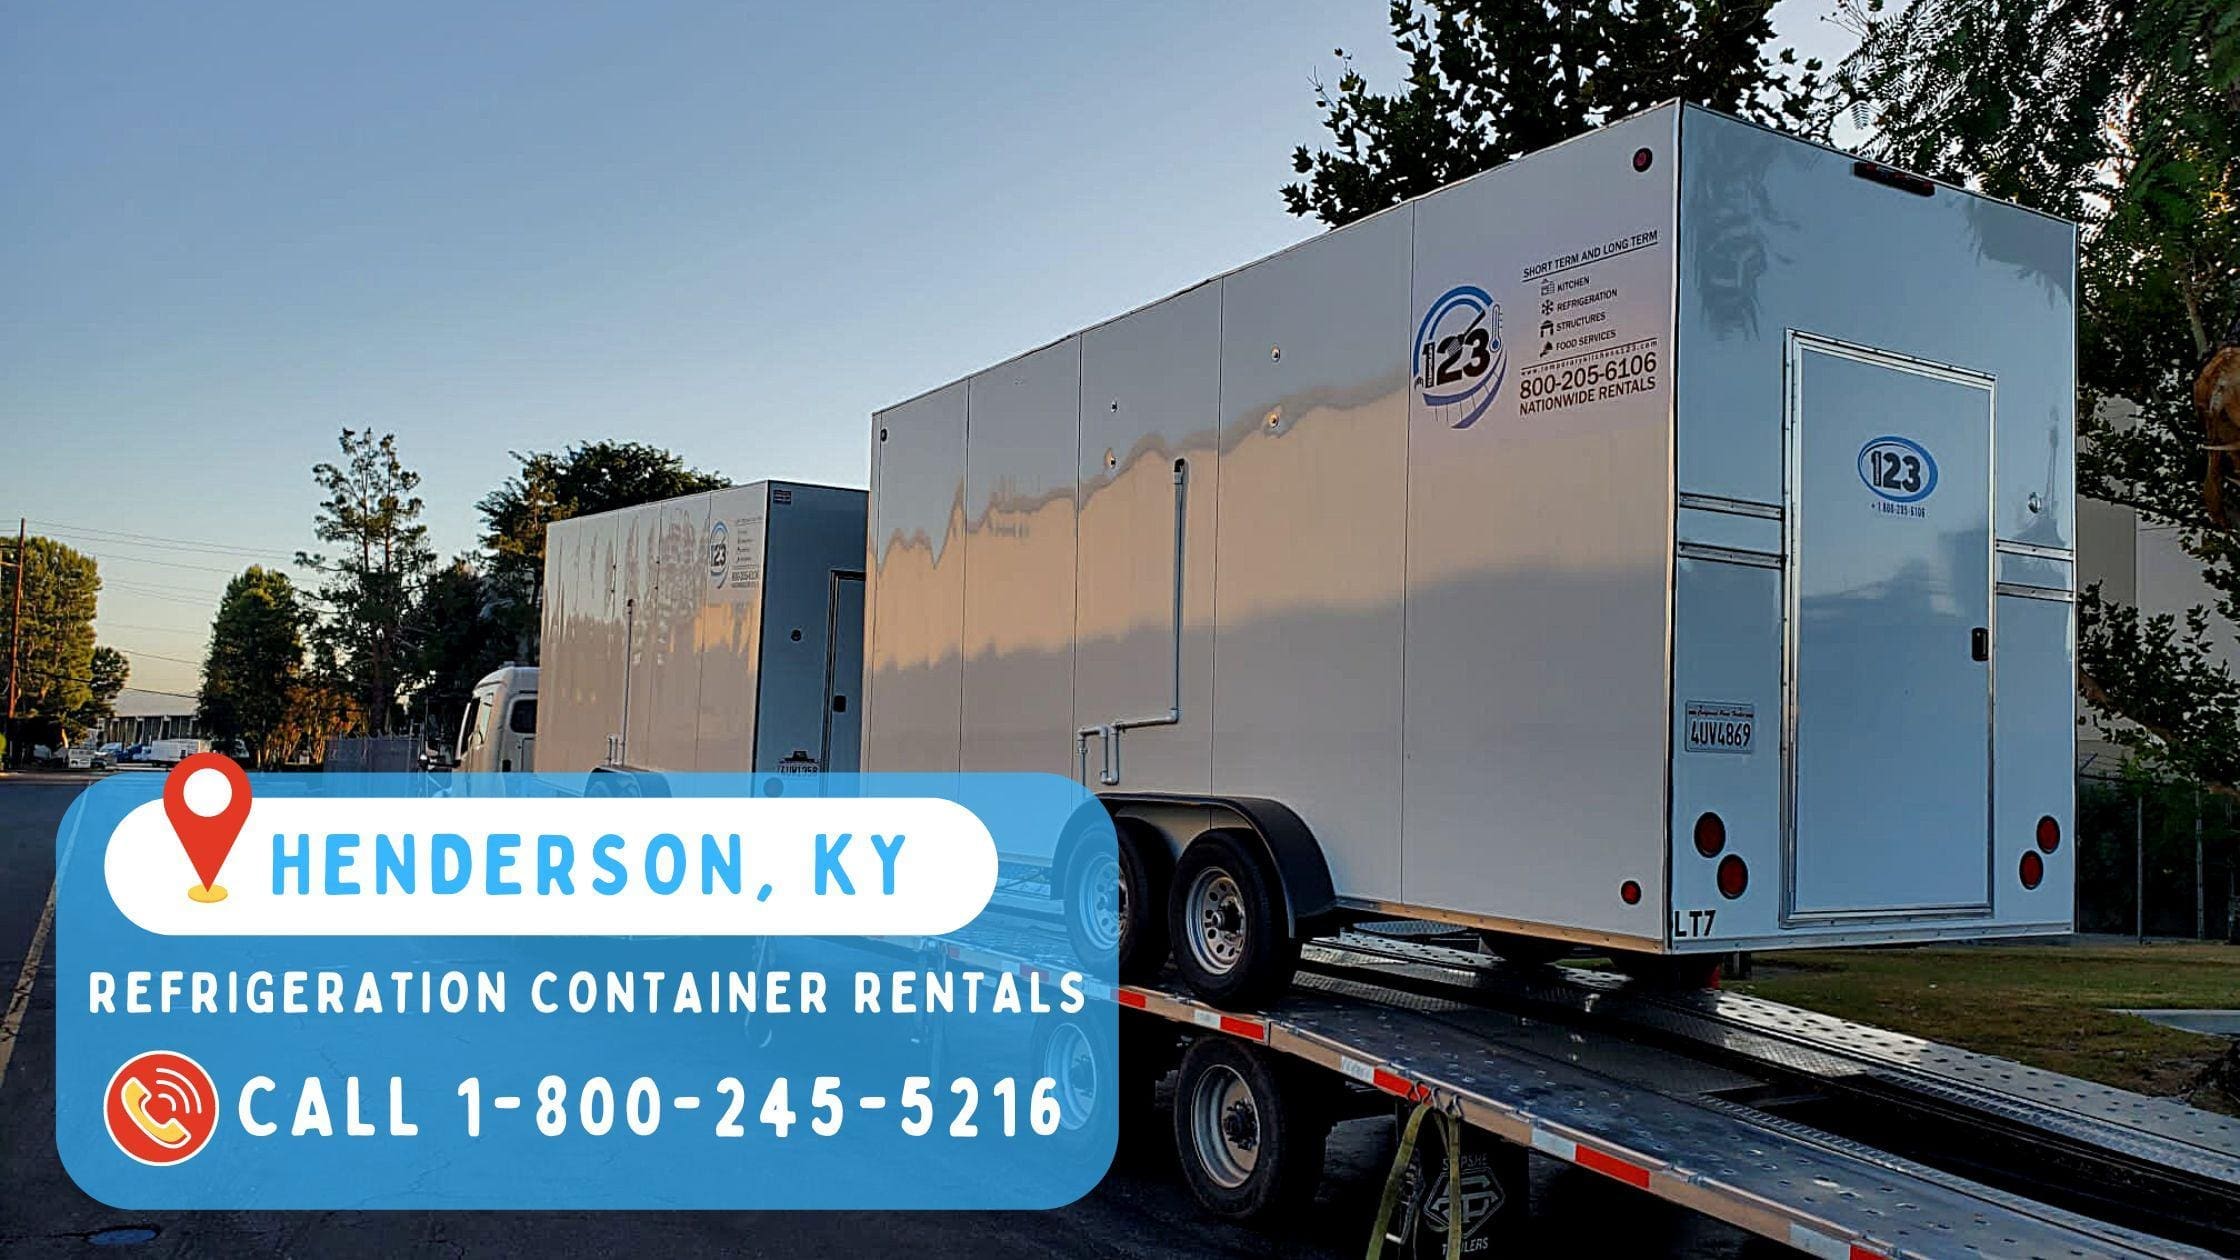 Refrigeration Container Rentals in Henderson